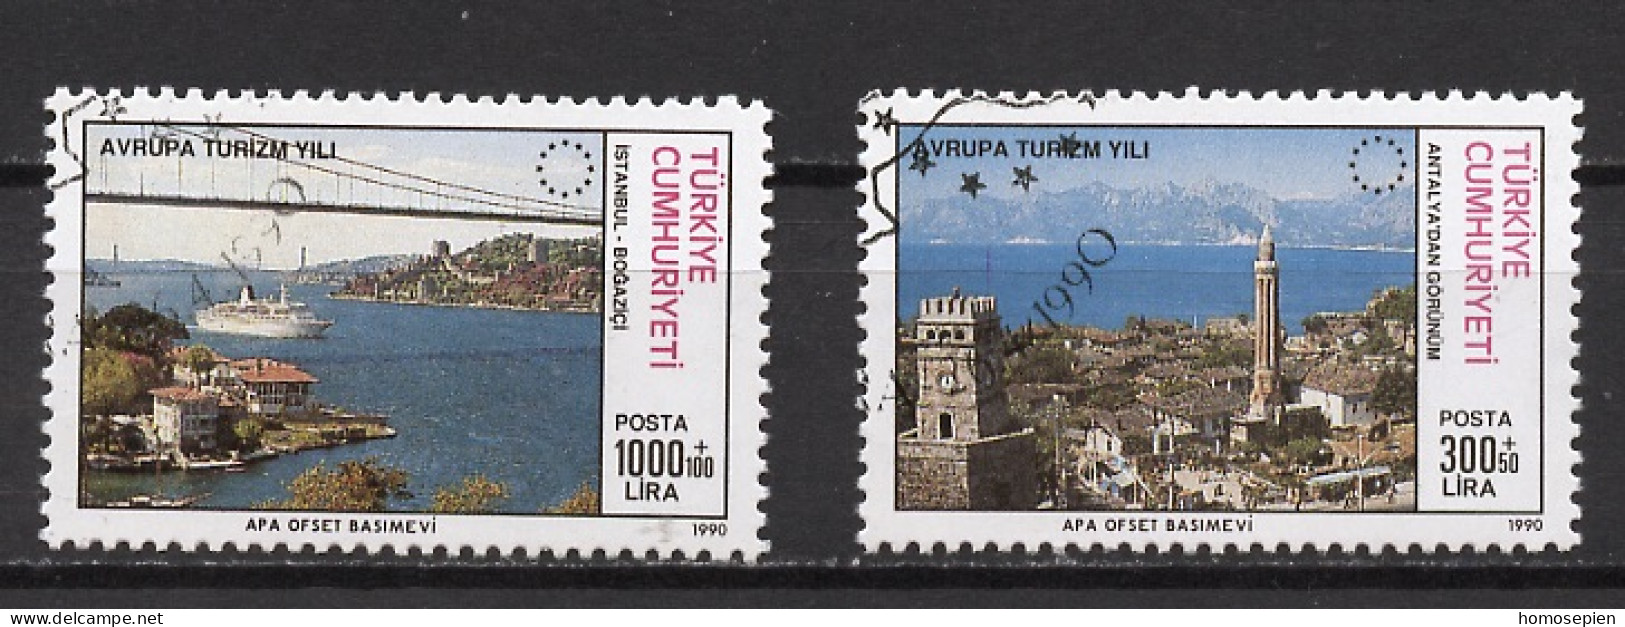 Turquie - Türkei - Turkey 1990 Y&T N°2632 à 2633 - Michel N°2884 à 2885 (o) - Année Du Tourisme - Used Stamps